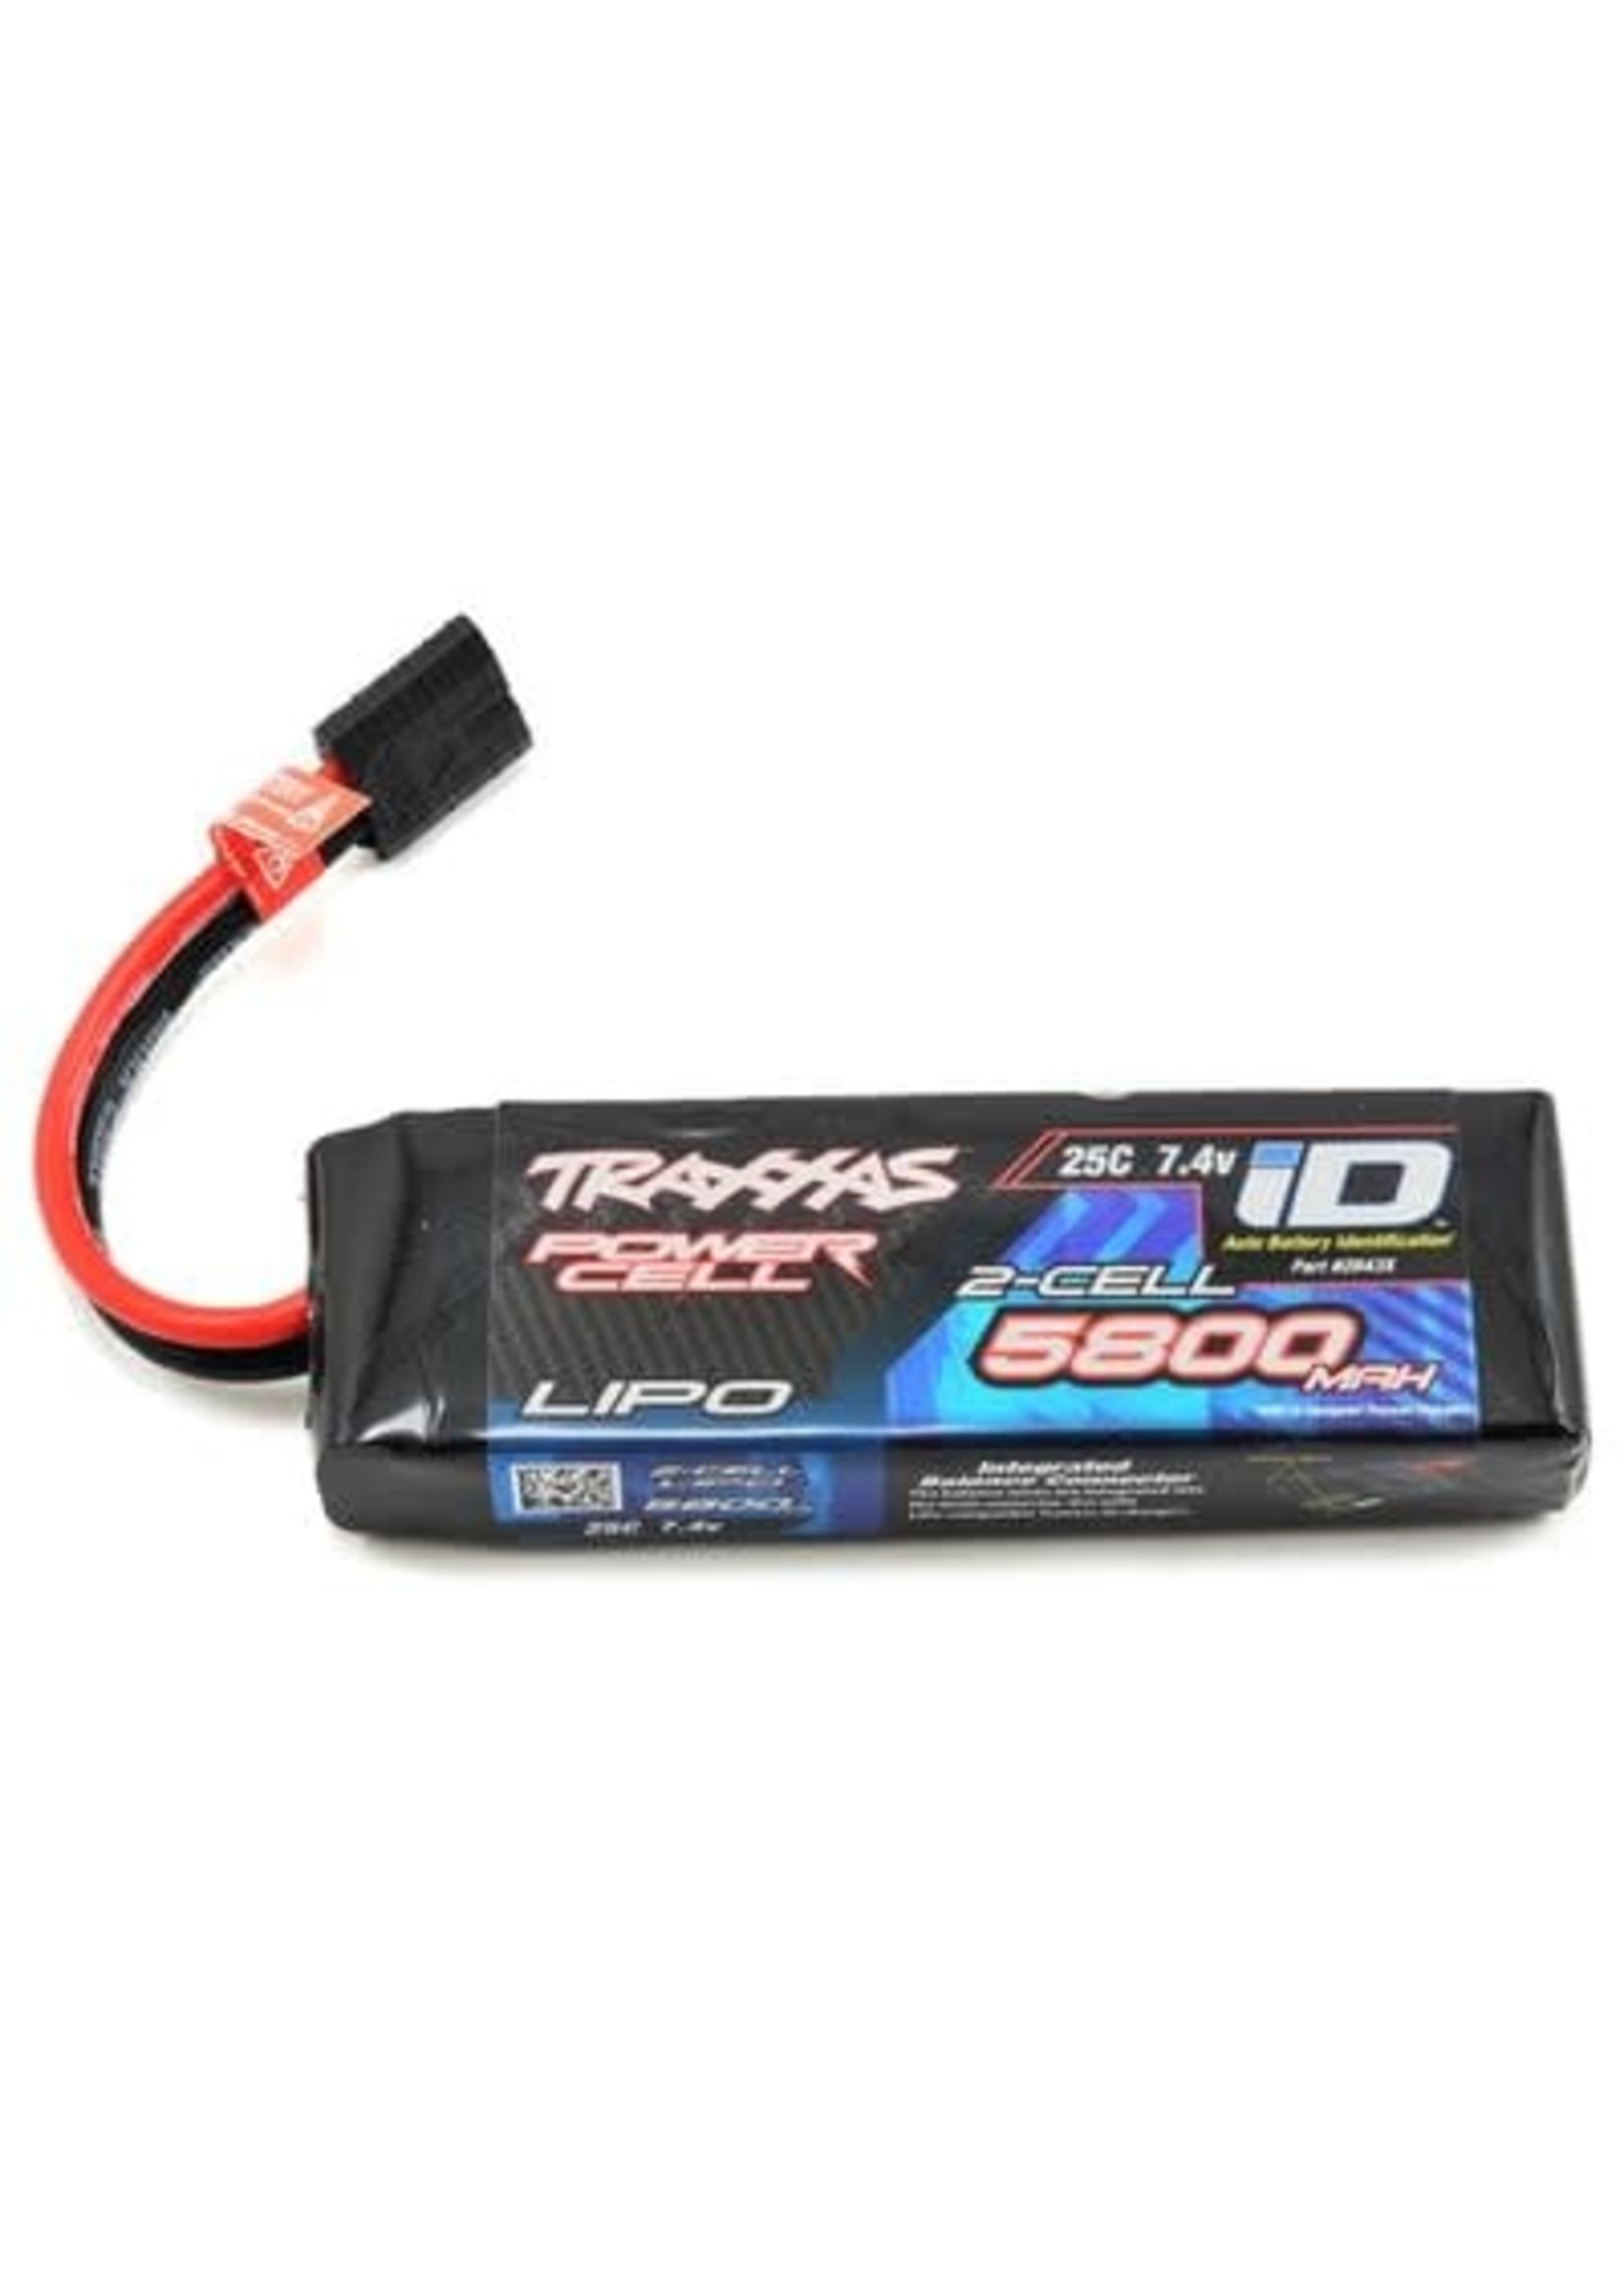 Traxxas 2843X 5800mAh 7.4v 2-Cell 25C LiPo Battery